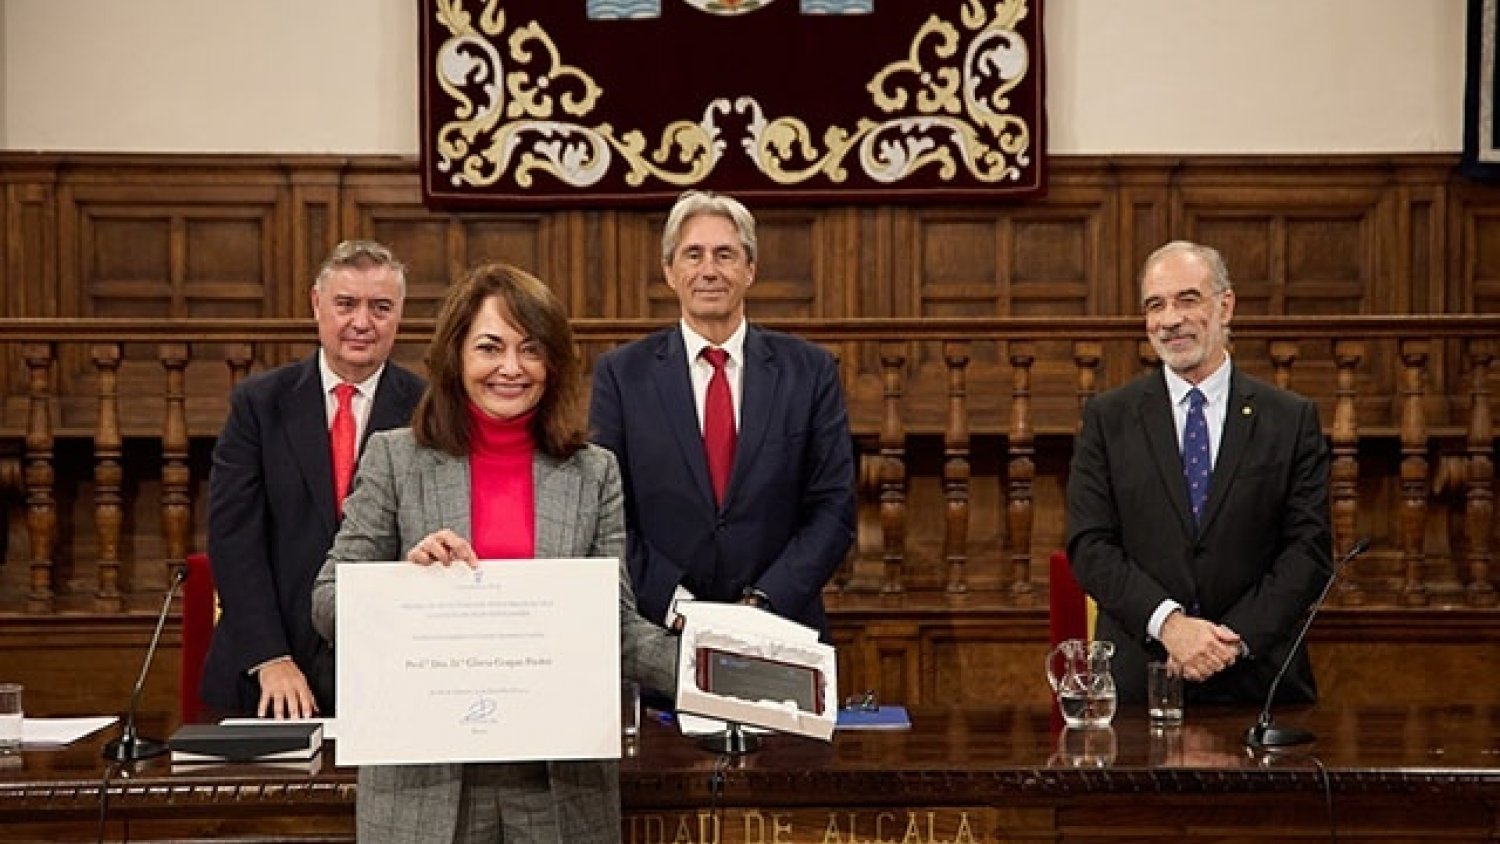 UMA.- La catedrática Gloria Corpas, premio ‘Doctora de Alcalá’ a la excelencia investigadora